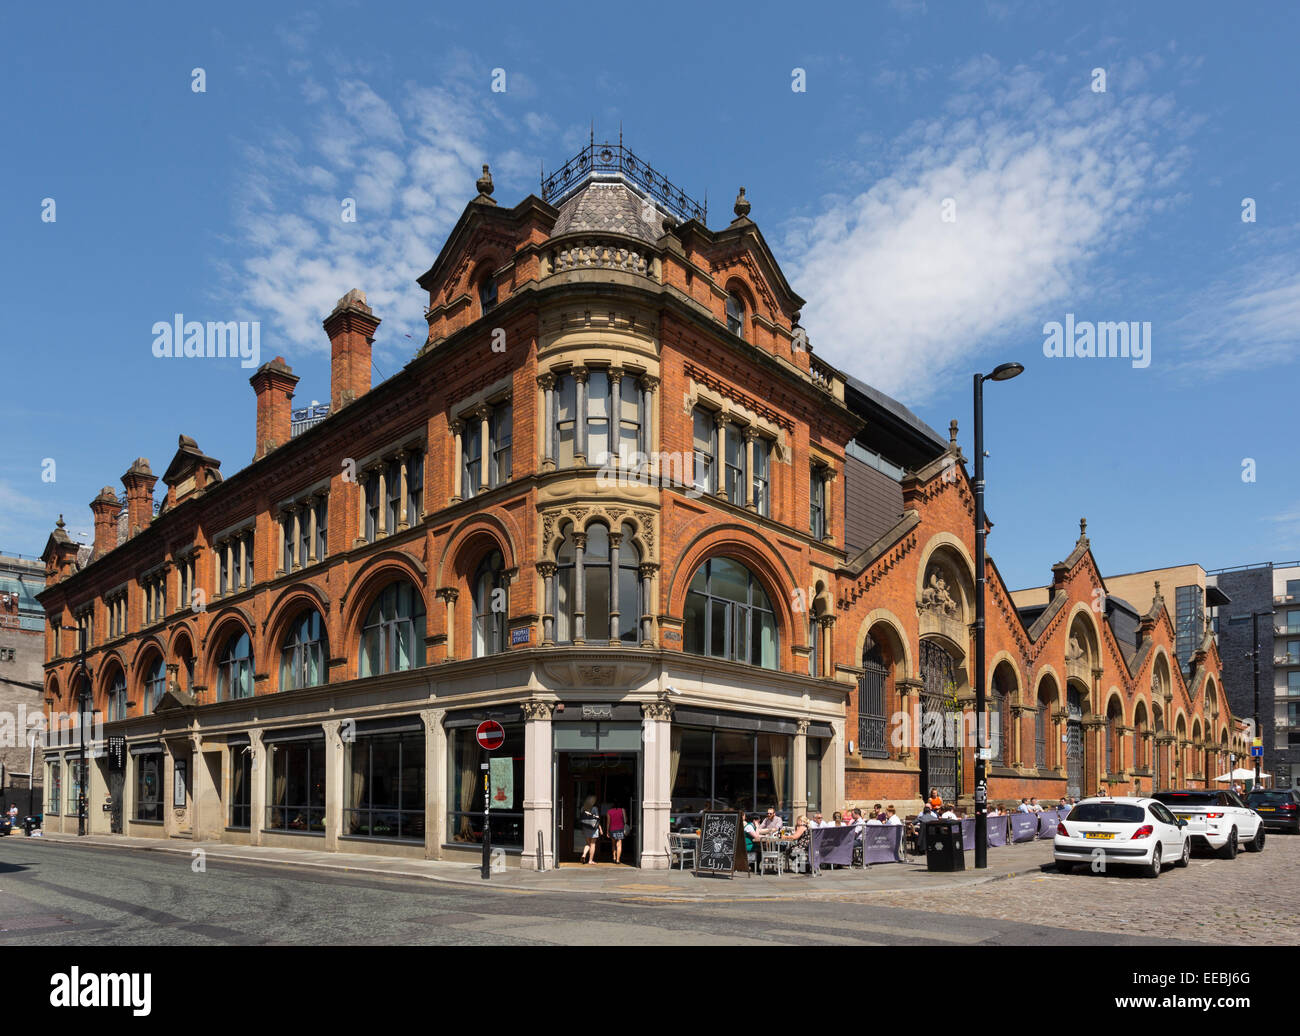 england-manchester-victorian-architecture-in-the-northern-quarter-EEBJ6G.jpg